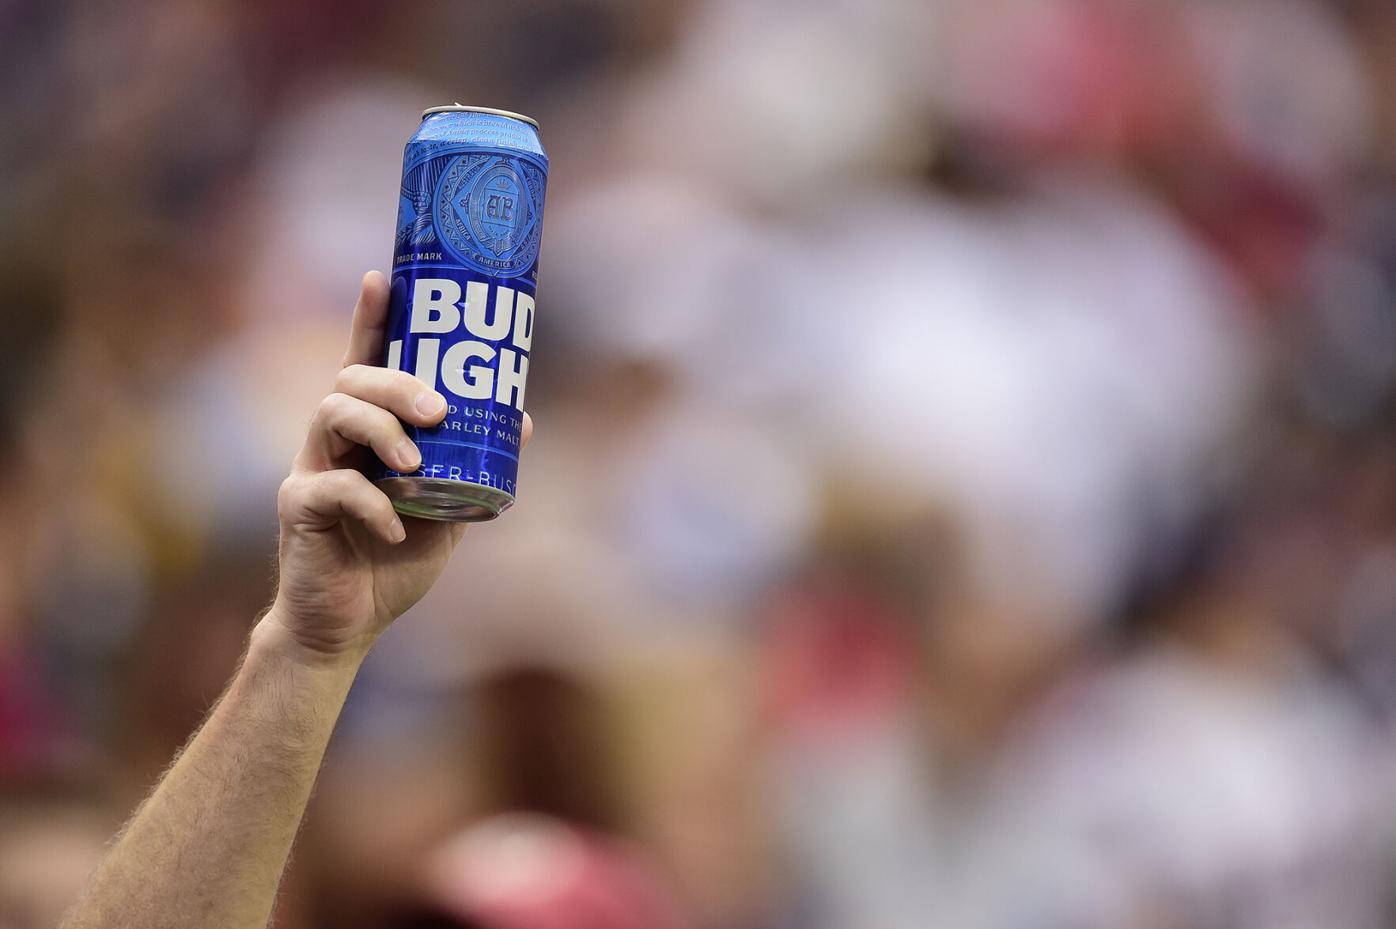 Anheuser-Busch facilities face threats after Bud Light backlash, National